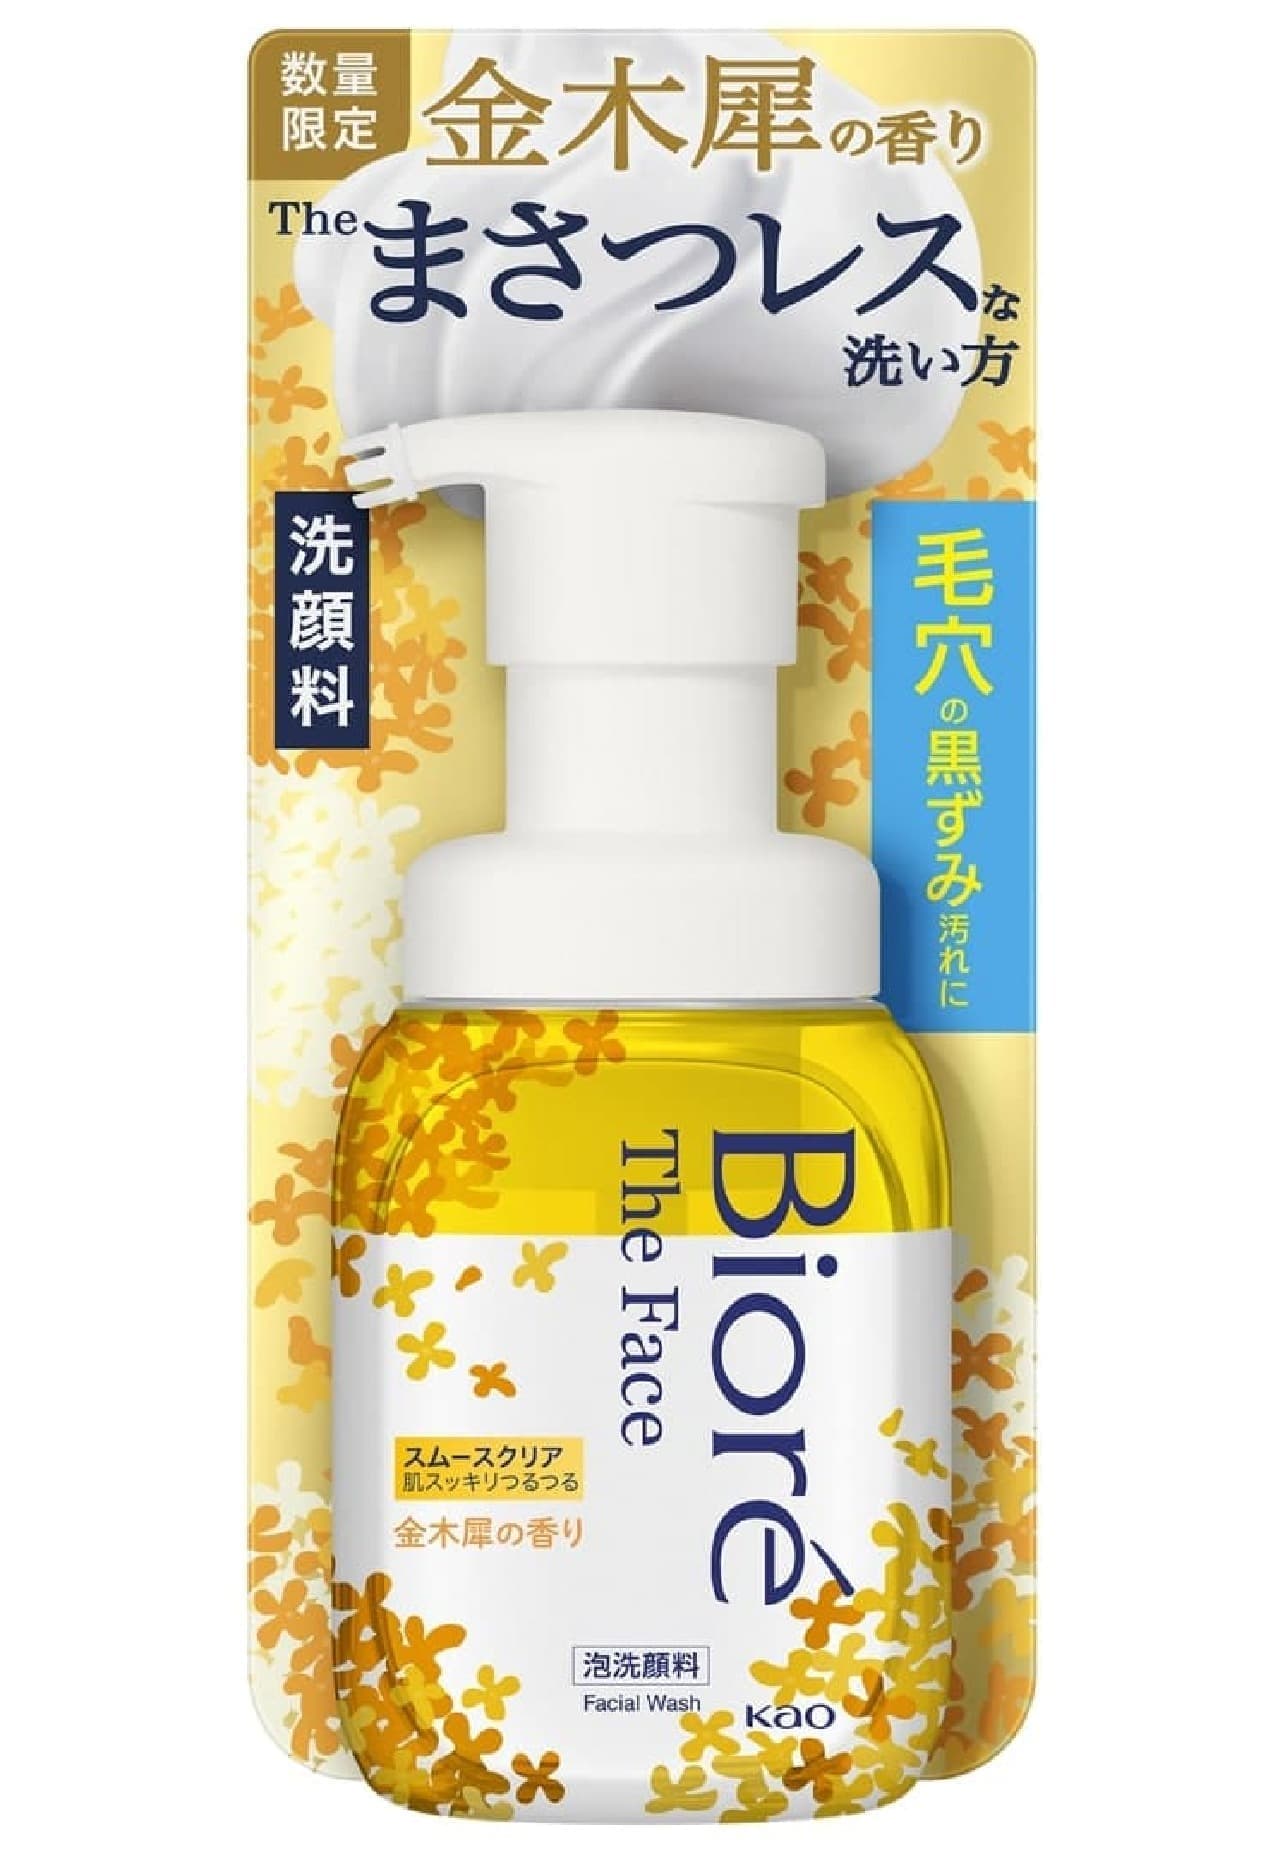 Biore The Face Foaming Facial Cleanser, Smooth Clear, Kinmokusei Fragrance